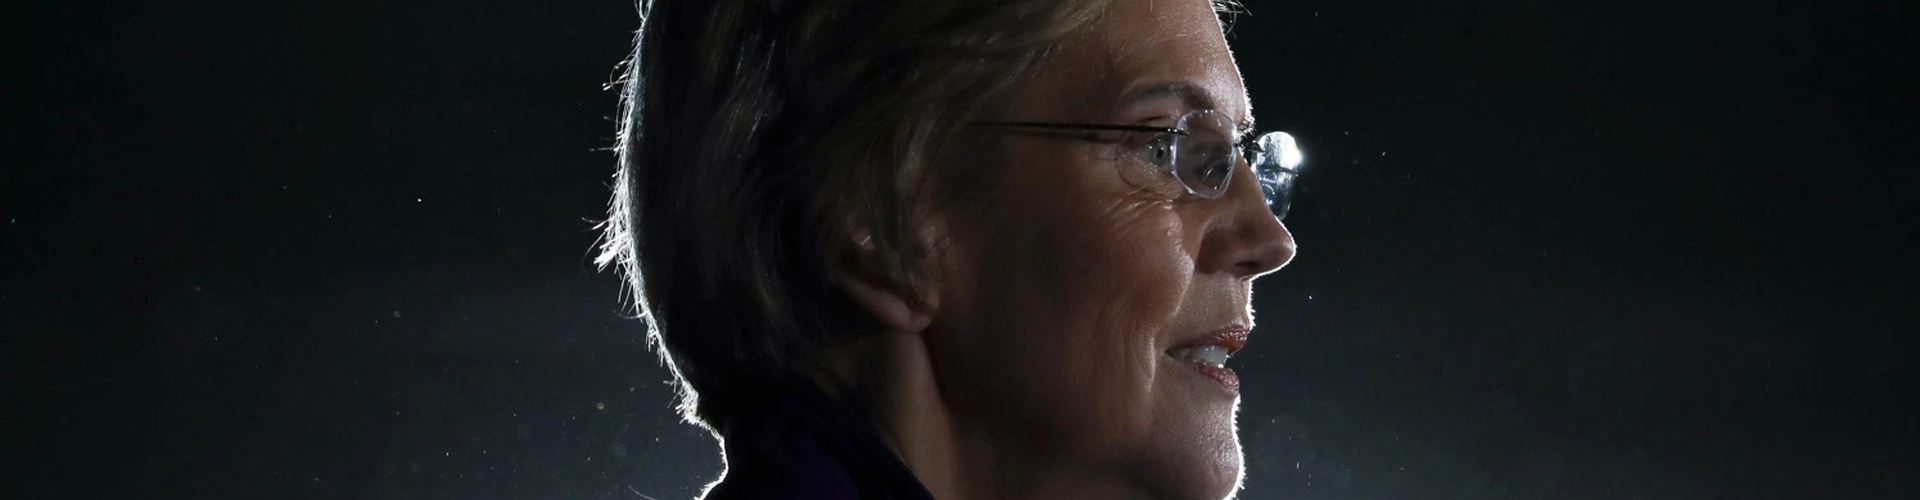 Elizabeth Warren Wants to Wipe Out Student Debt for 42 Million Americans